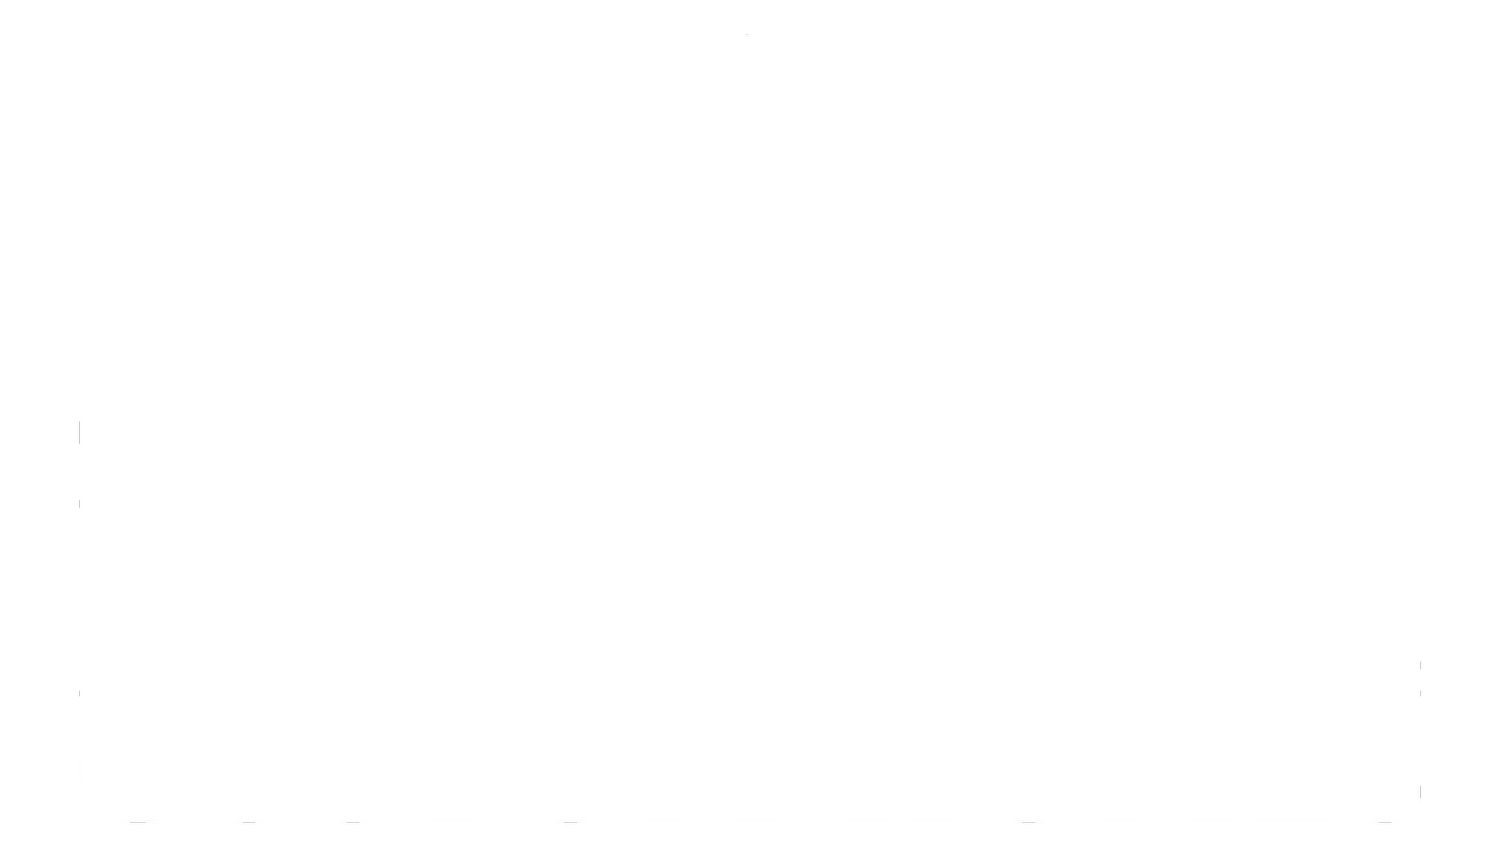 Willmark Custom Homes